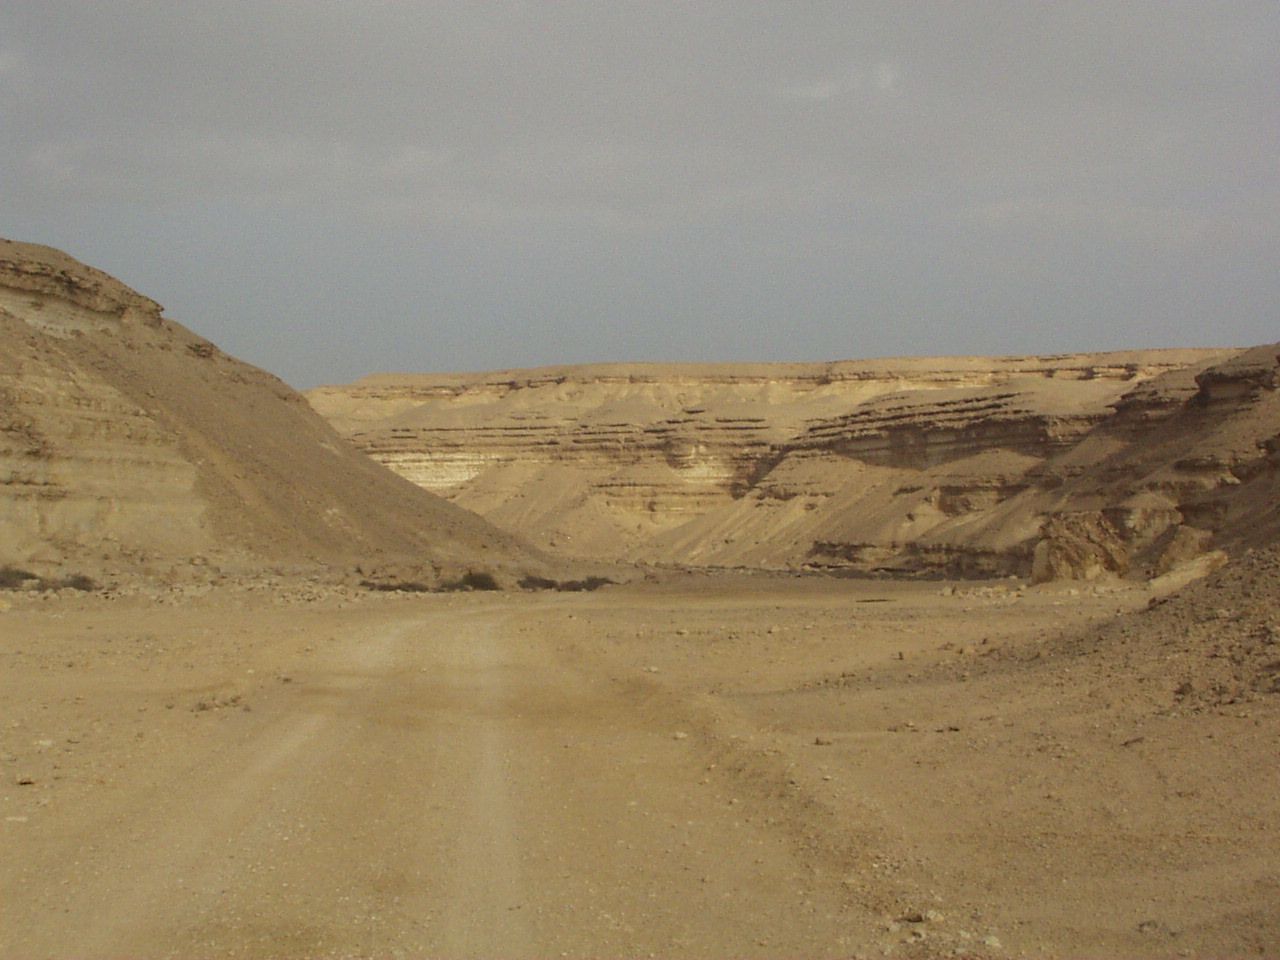 Wadi Degla Protectorate